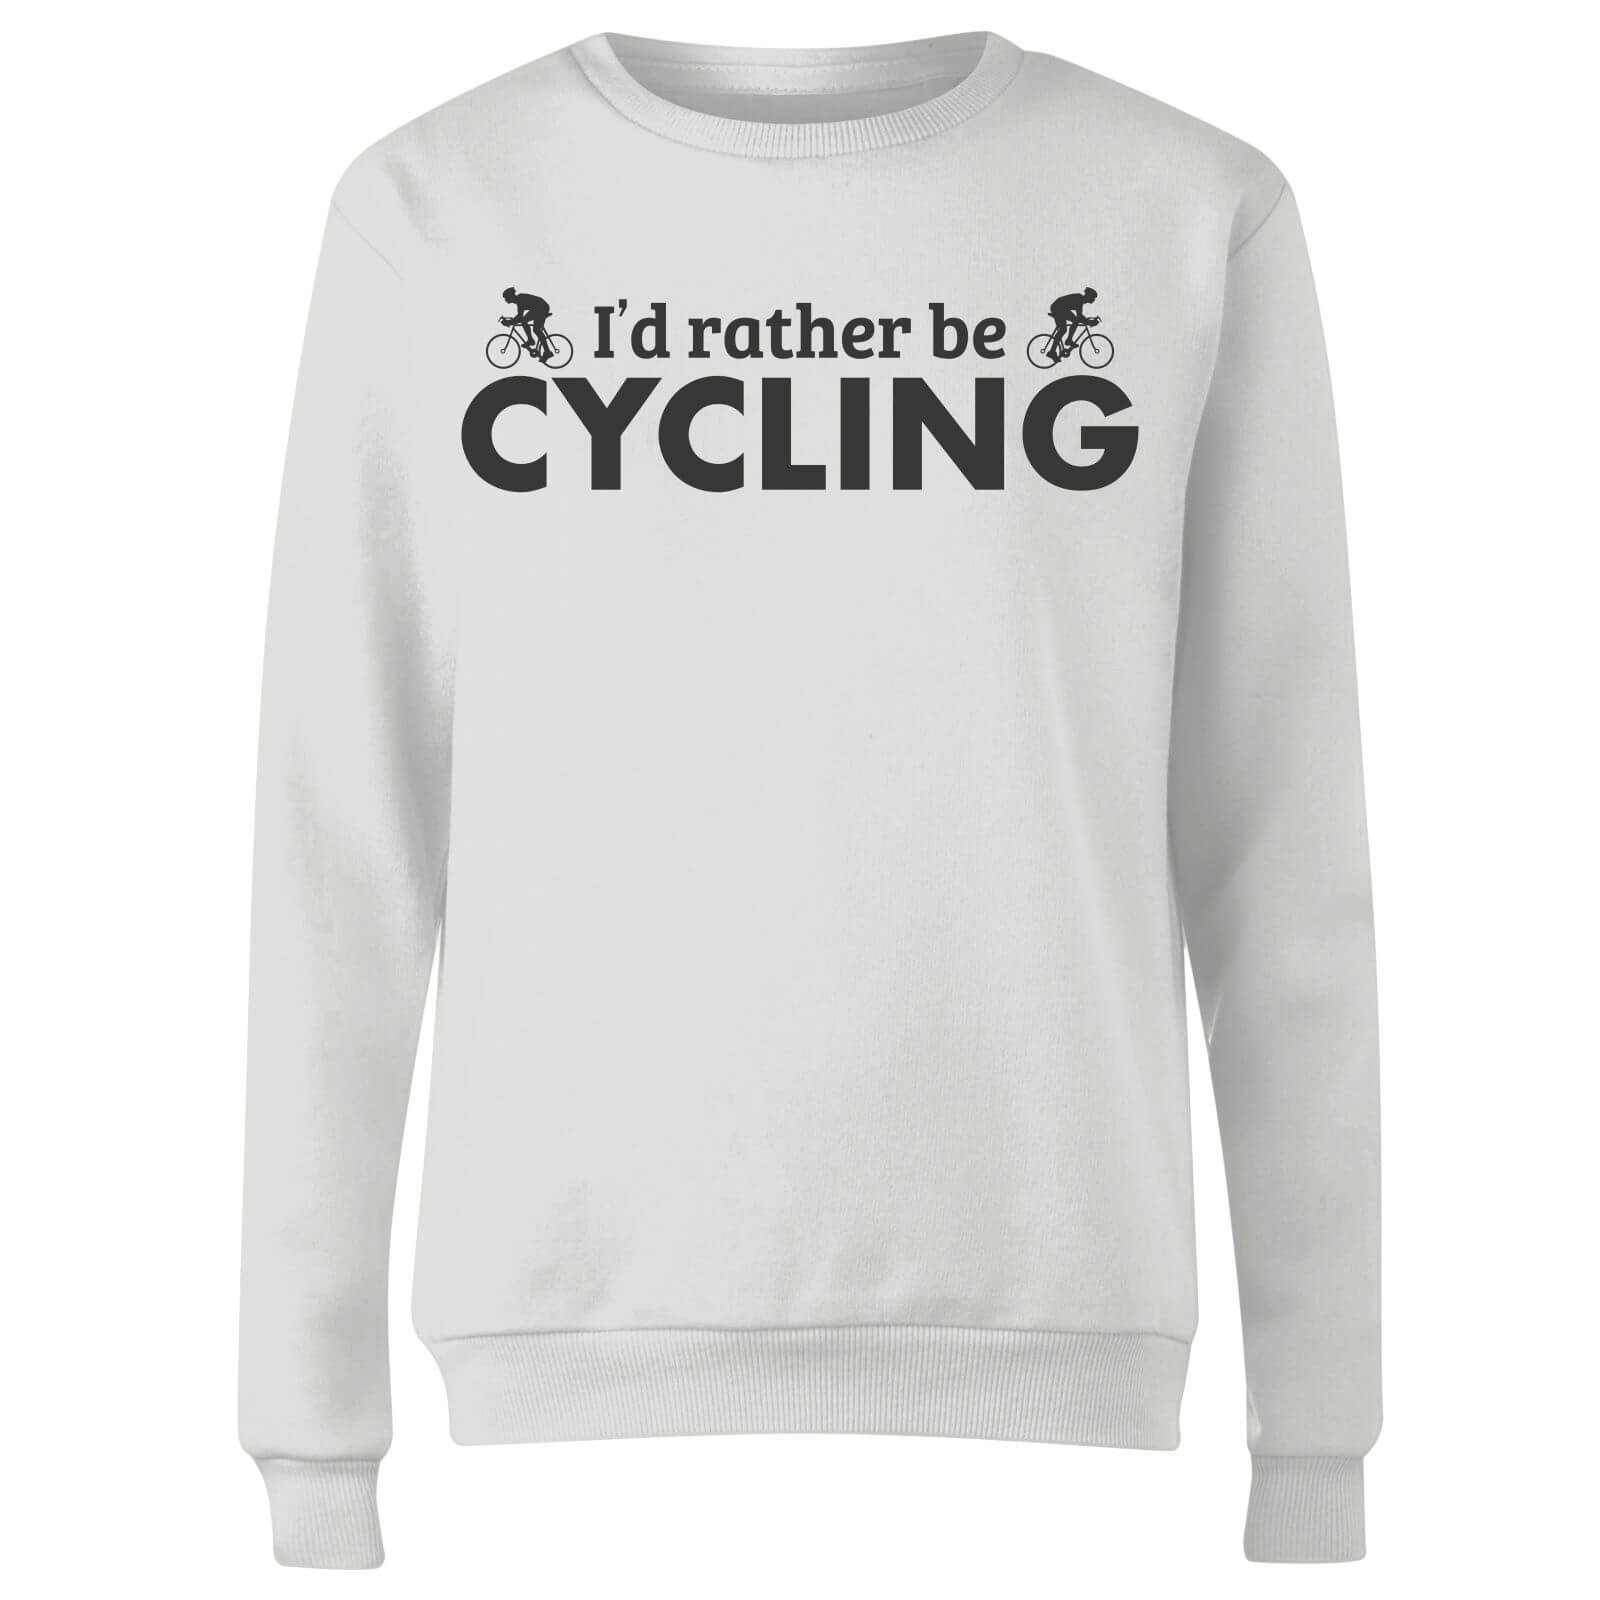 I'd Rather be Cycling Women's Sweatshirt - White - 5XL - White